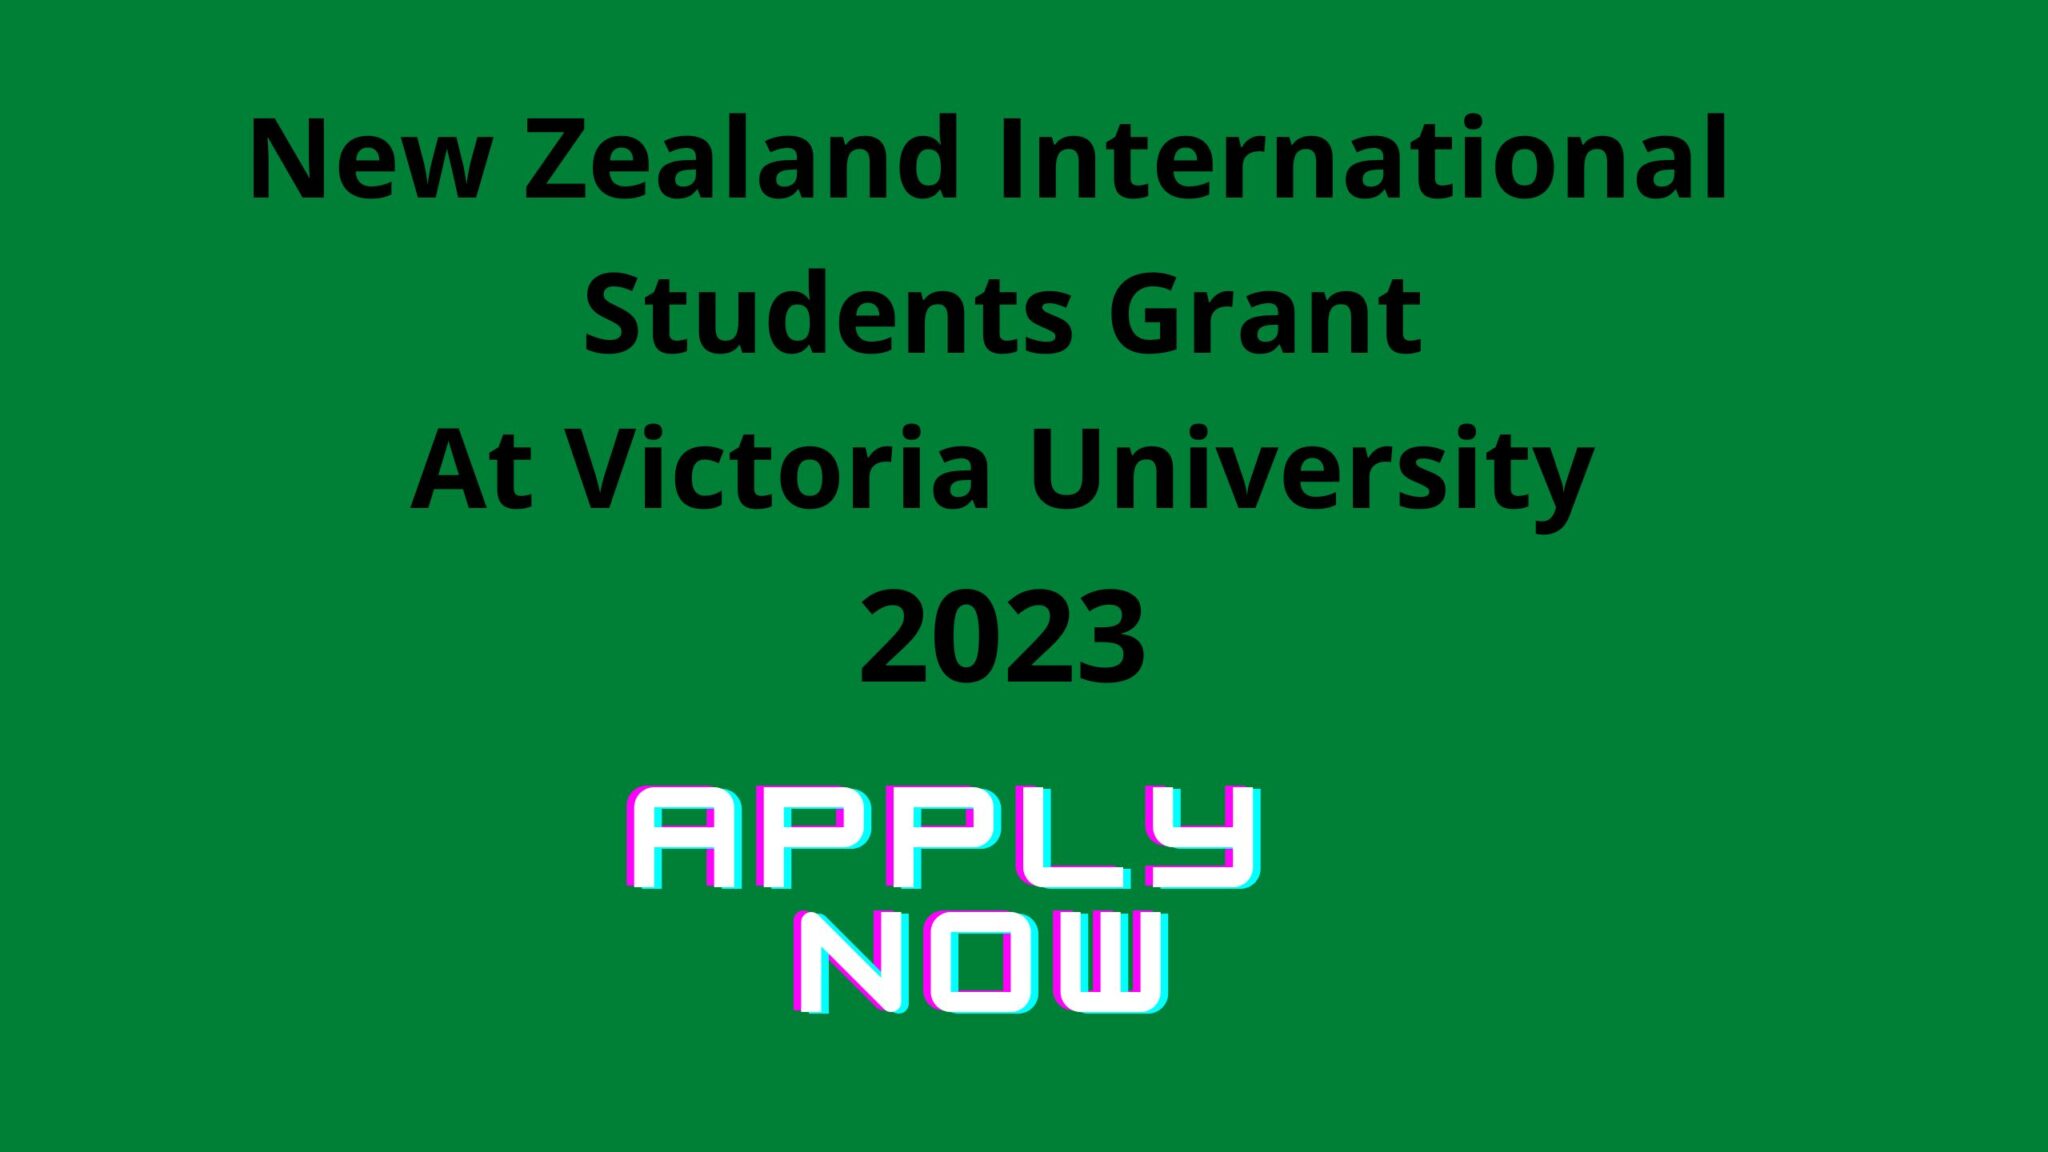 New Zealand International Students Grant At Victoria University 2023